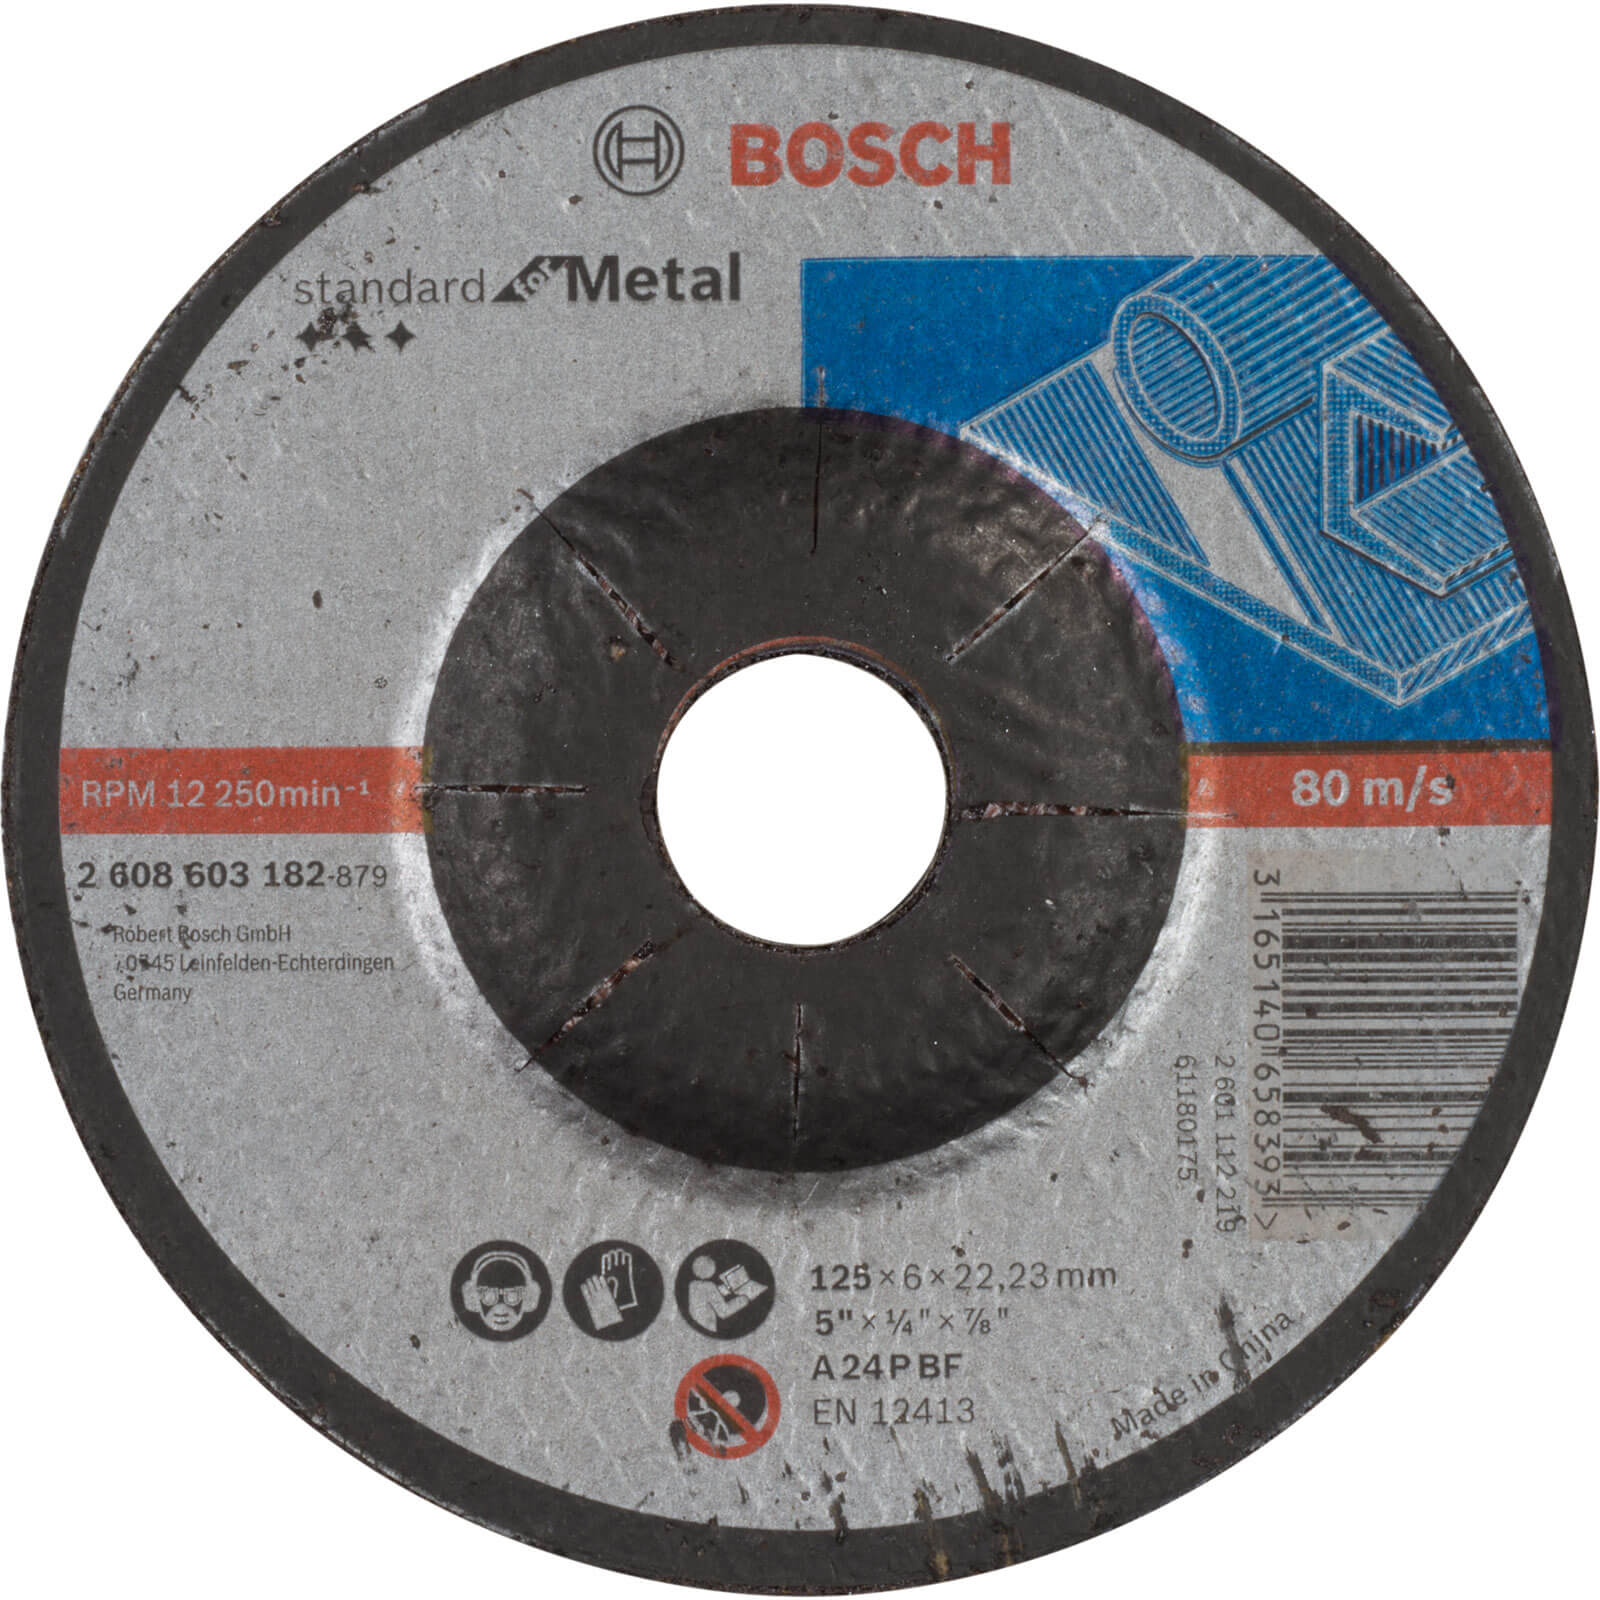 Image of Bosch Standard Depressed Centre Metal Grinding Disc 125mm 6mm 22mm